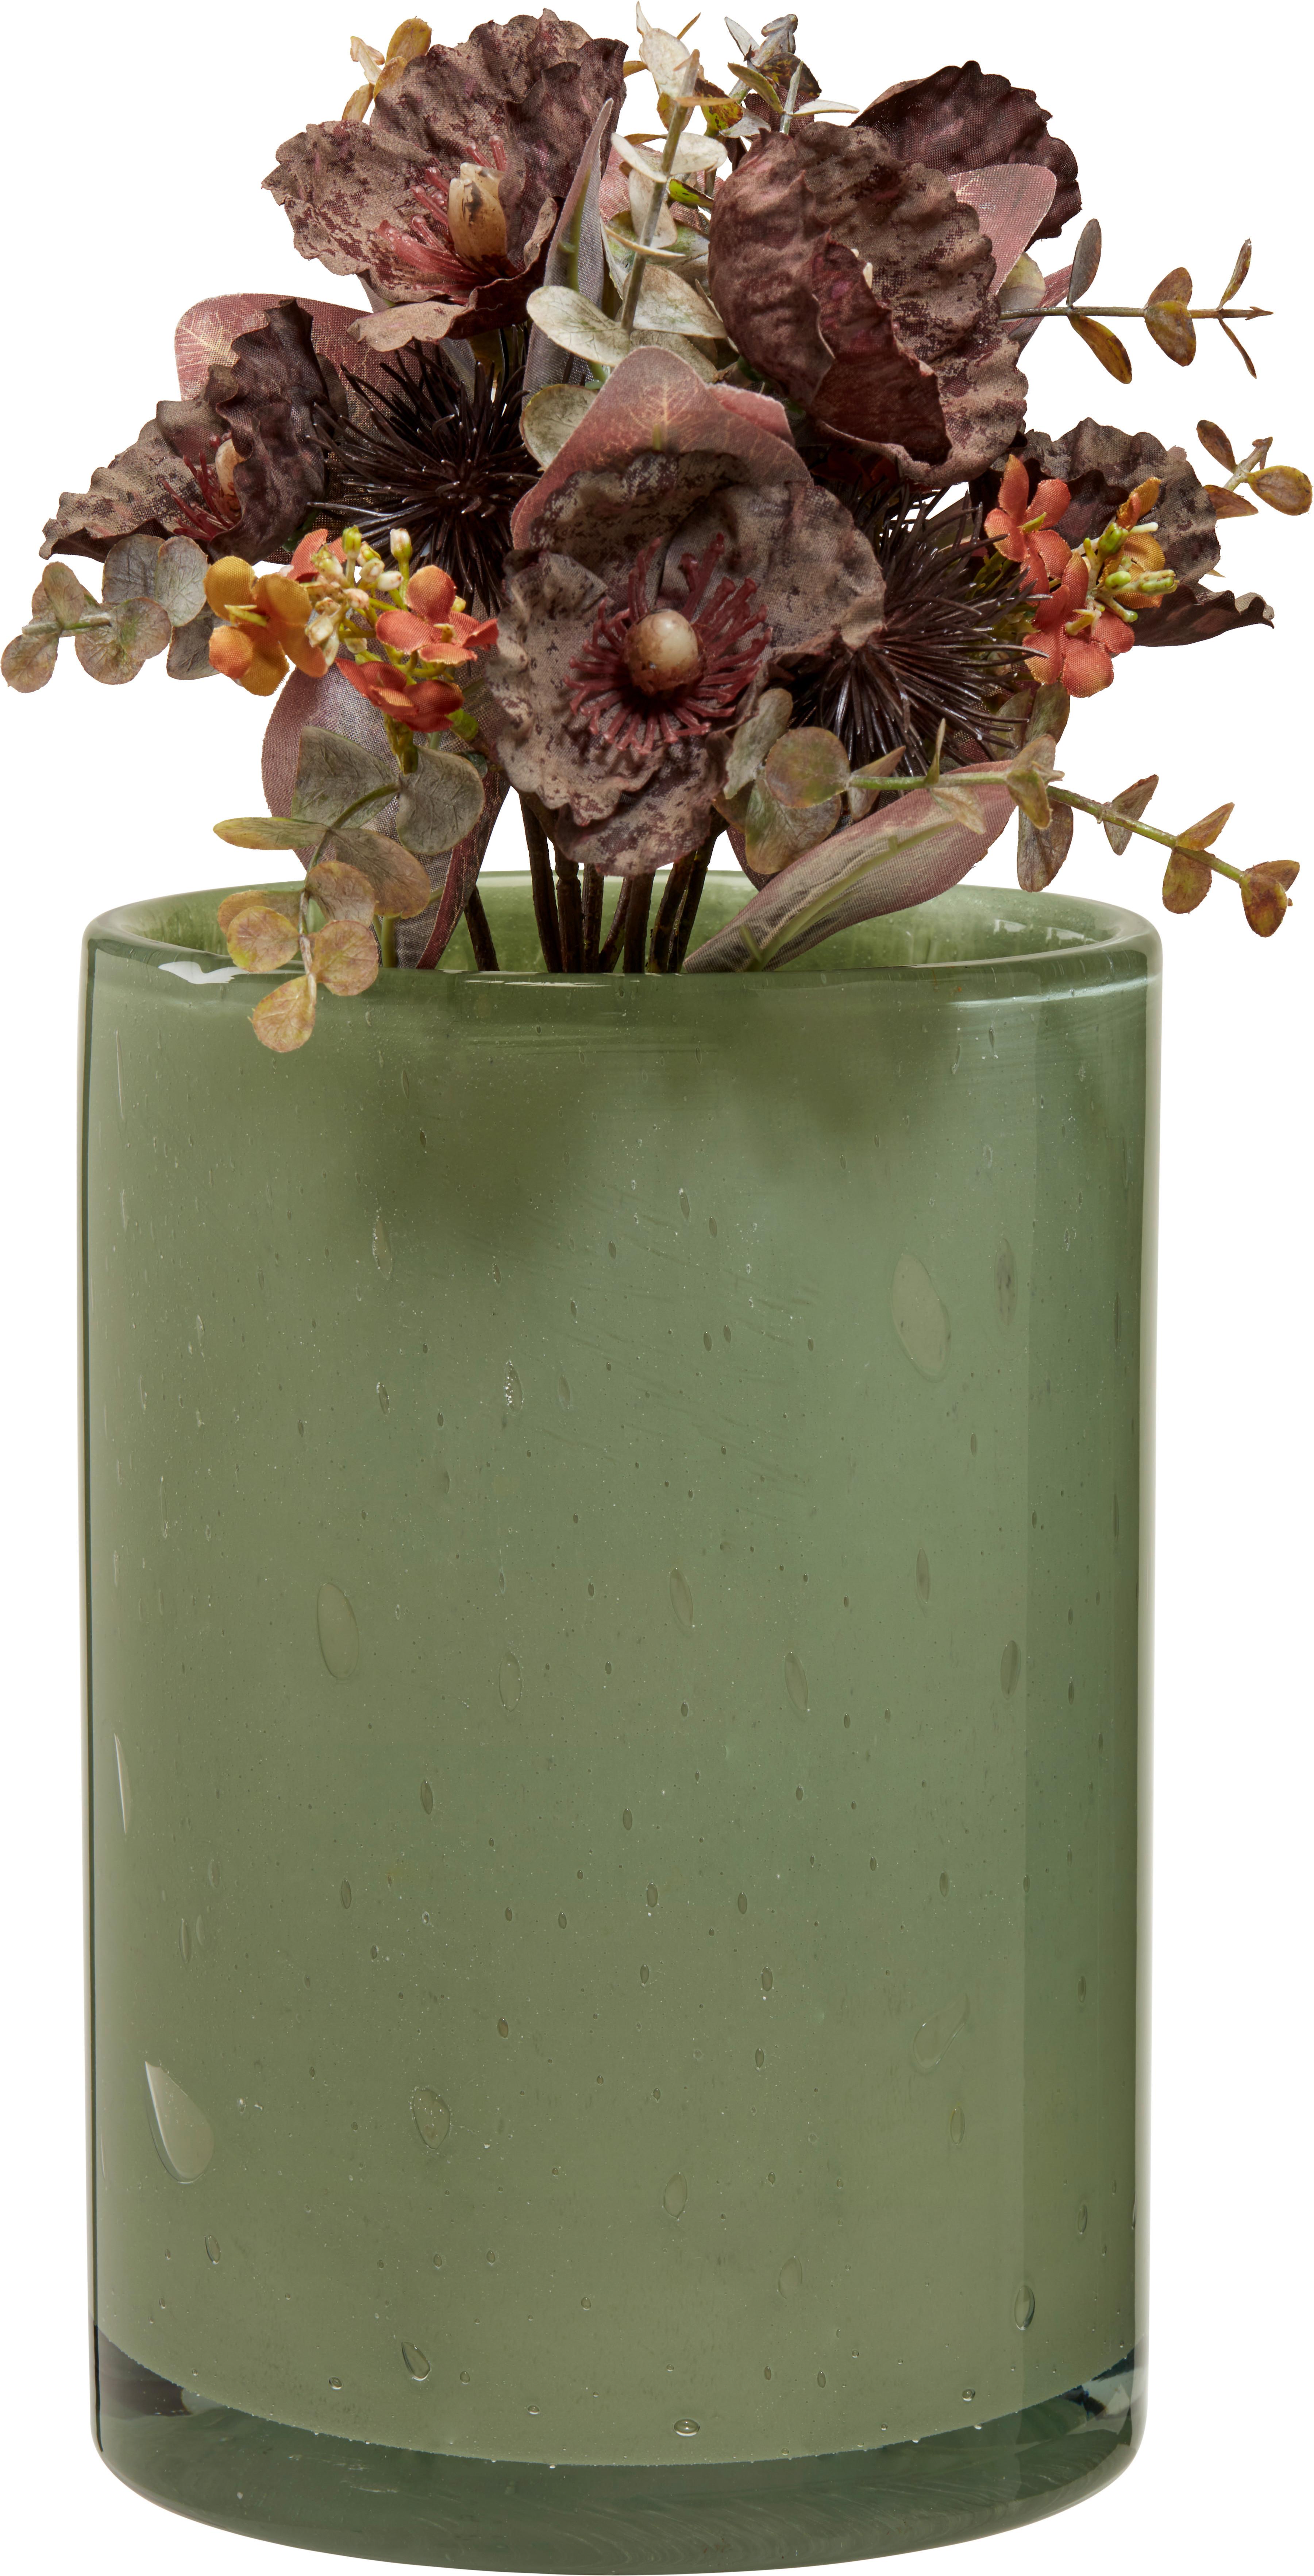 Dekorativna Vaza Estelle -Paz- - zelena, Basics, steklo (17/23cm) - Modern Living